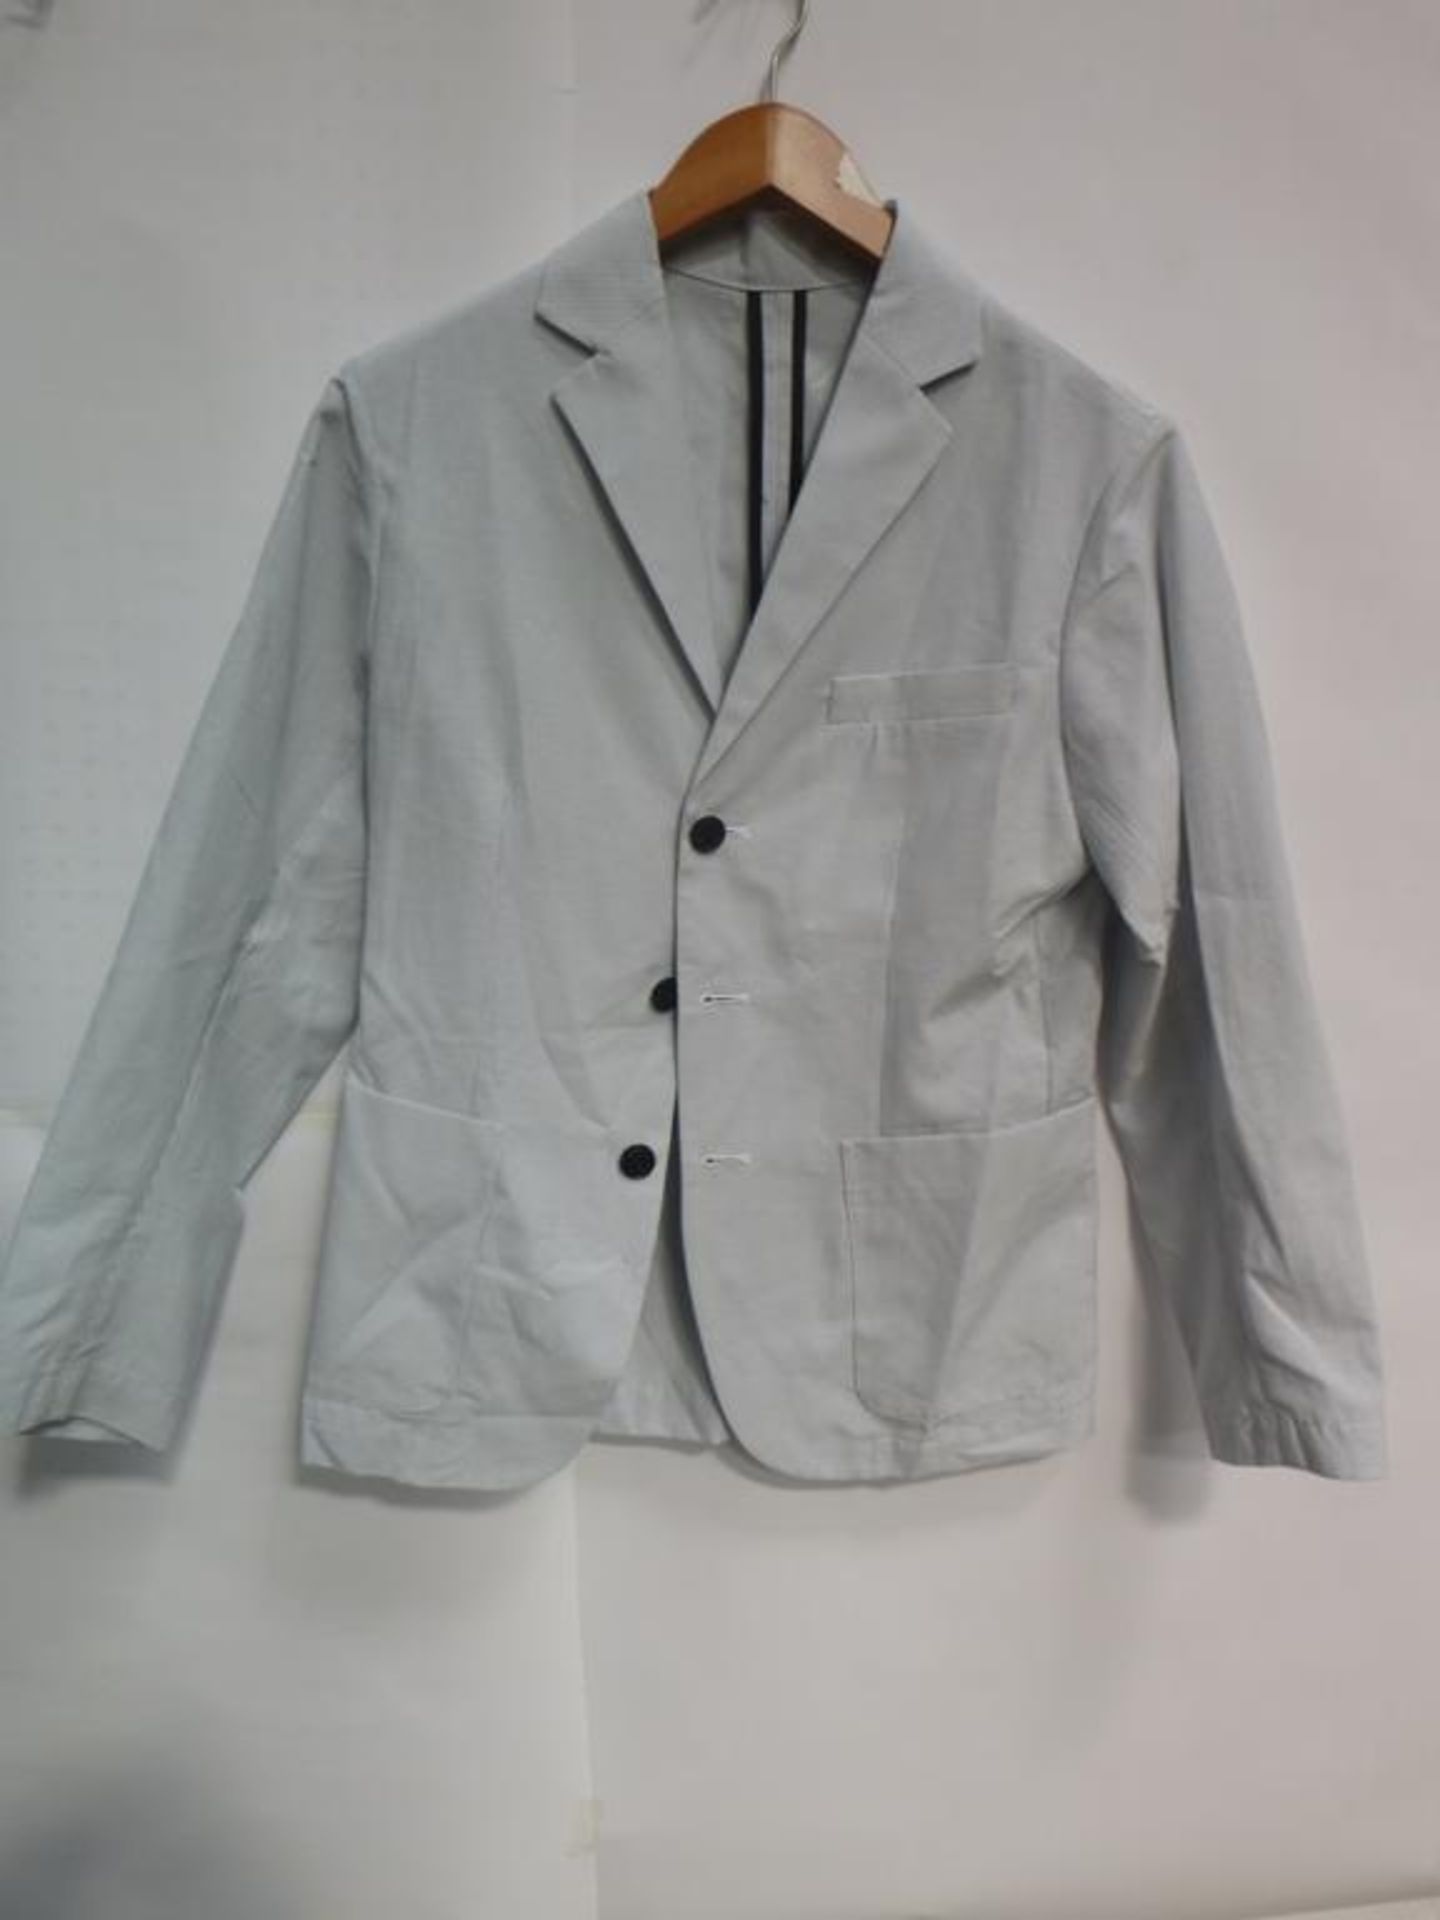 A Dark Ladies Blazer/Jacket (L), Yacco Maricard White Cotton Dress (?), Squared Black and White Dres